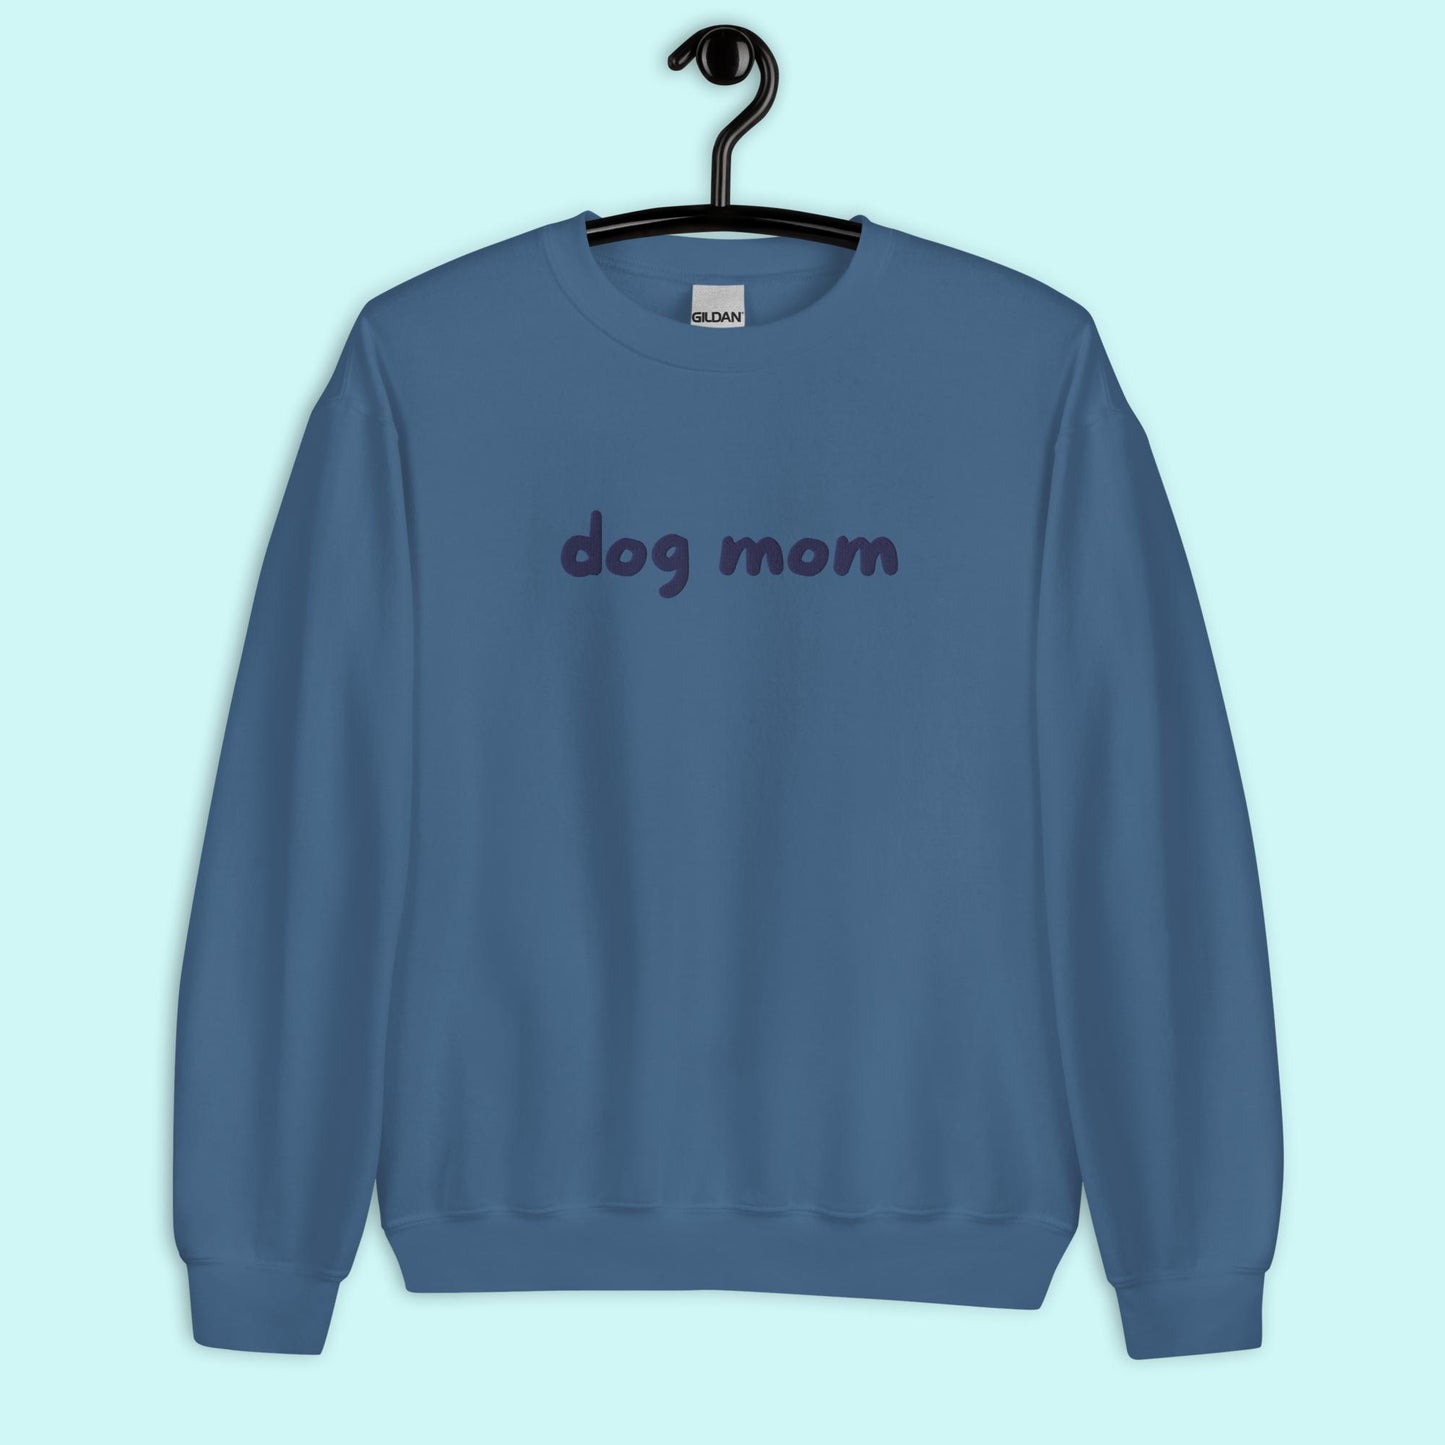 Dog mom embroidered sweatshirt - blue